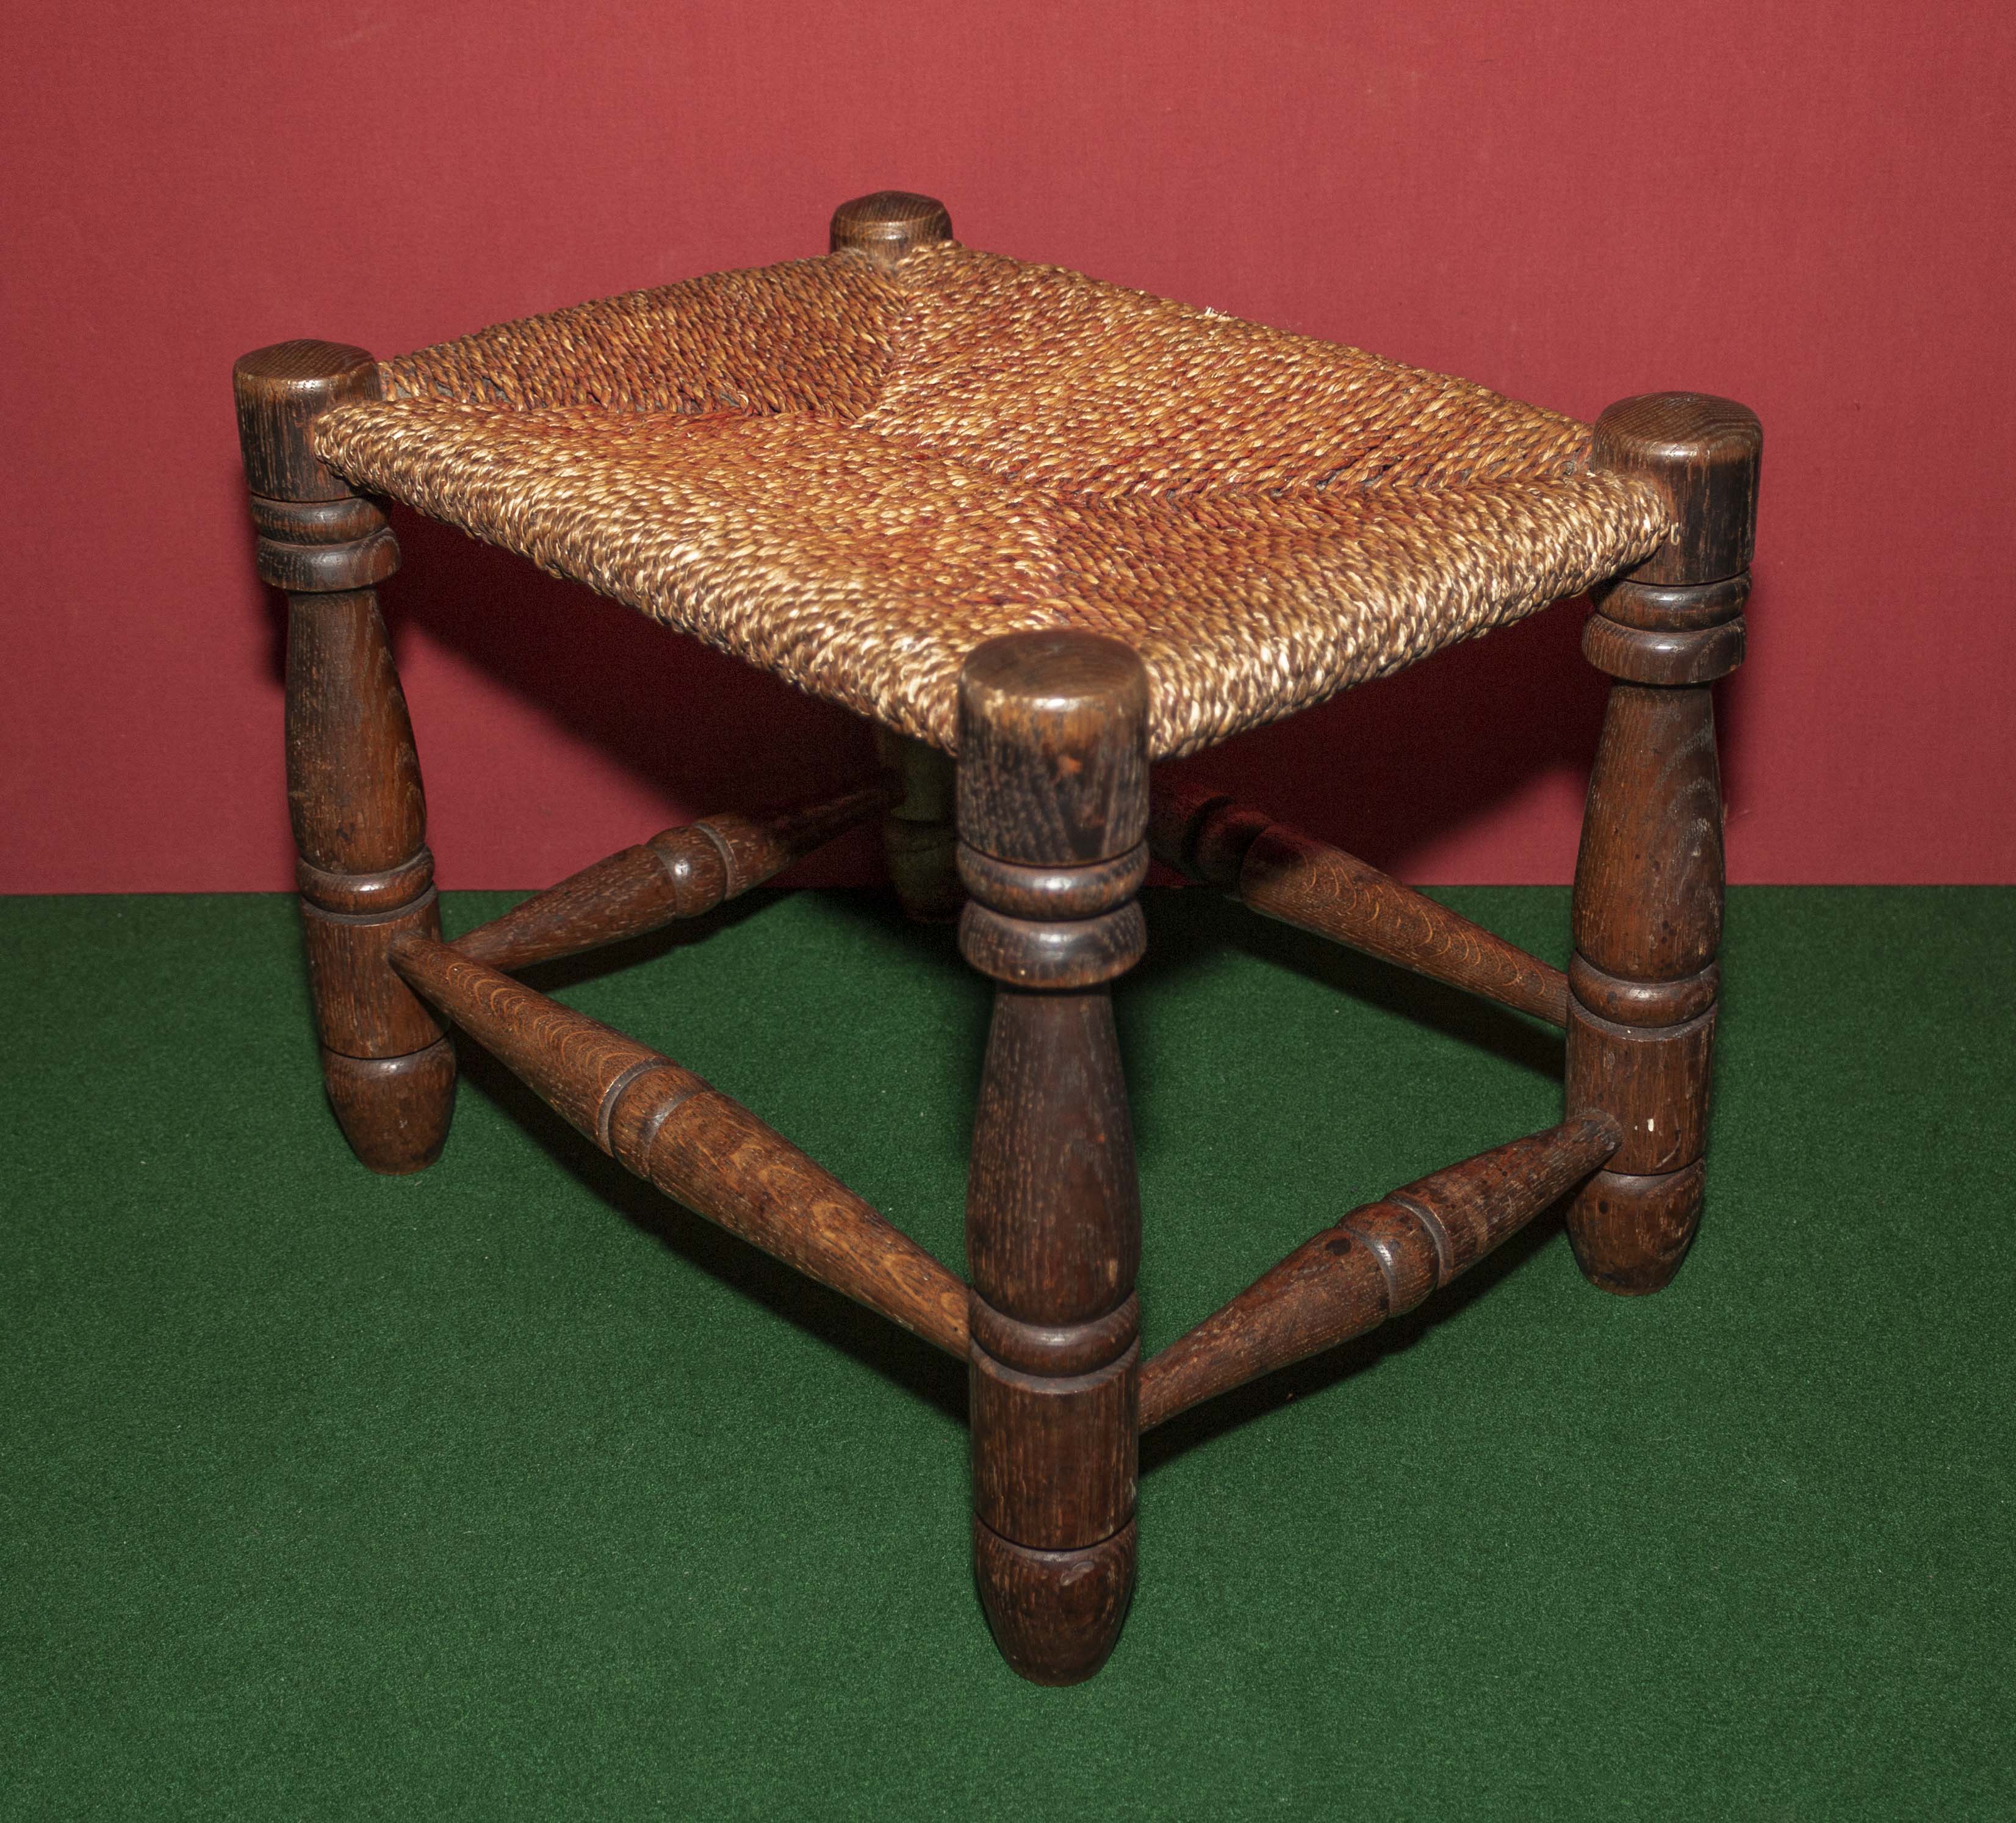 A foot stool